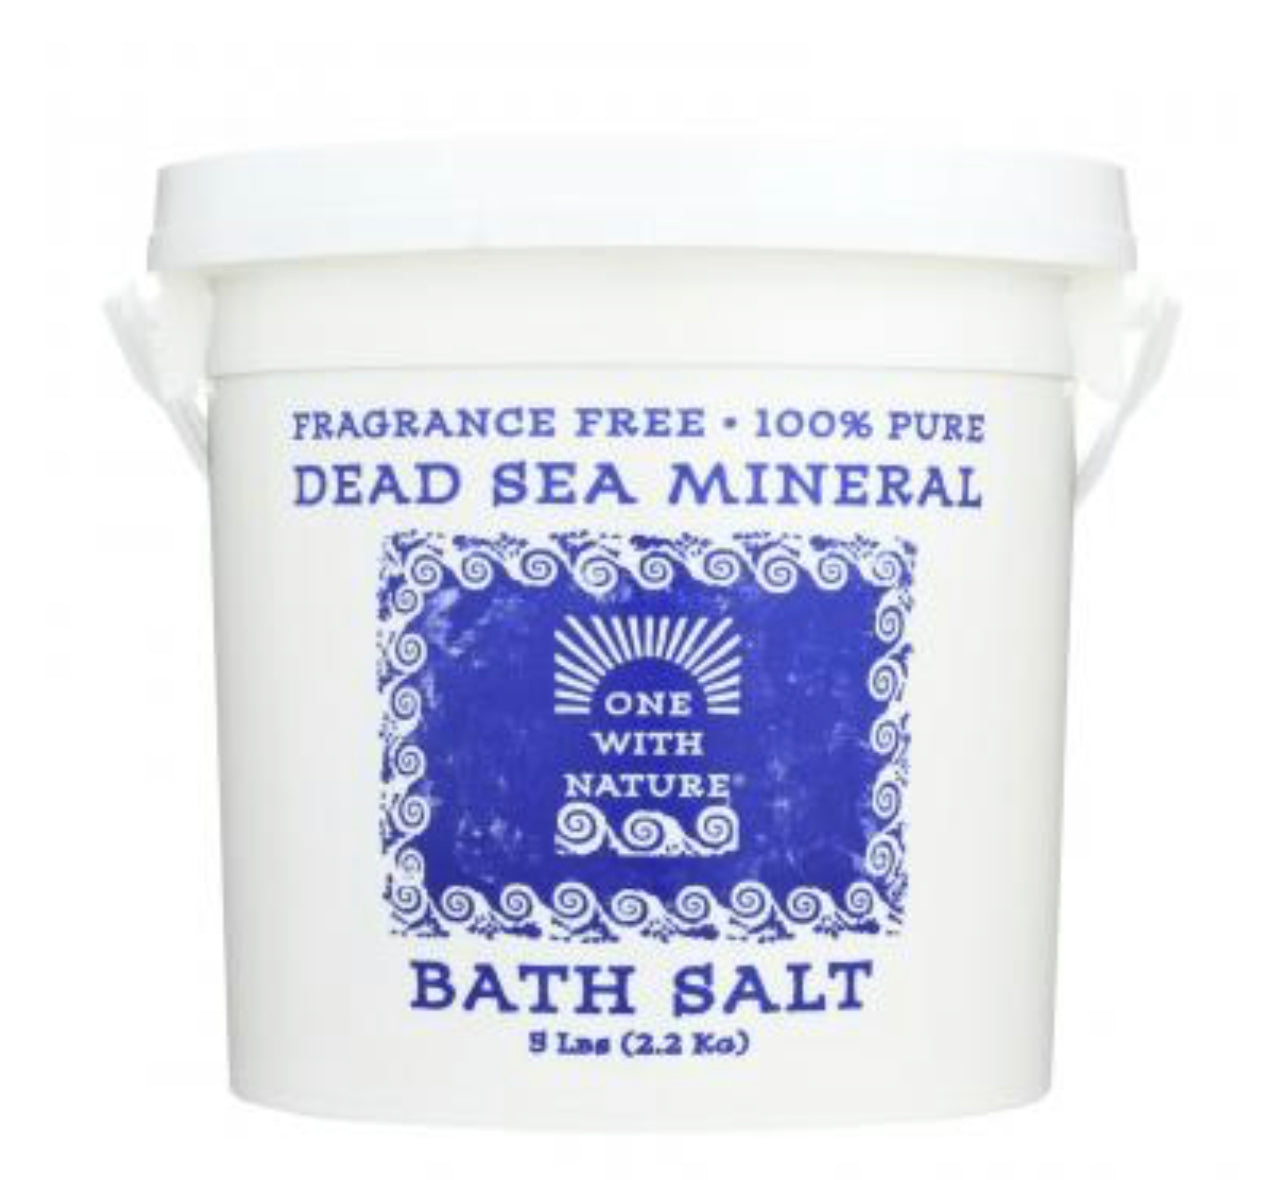 One With Nature Bath Salt, Dead Sea Bath Salts, Fragrance Free - 1 Each - 5 LB